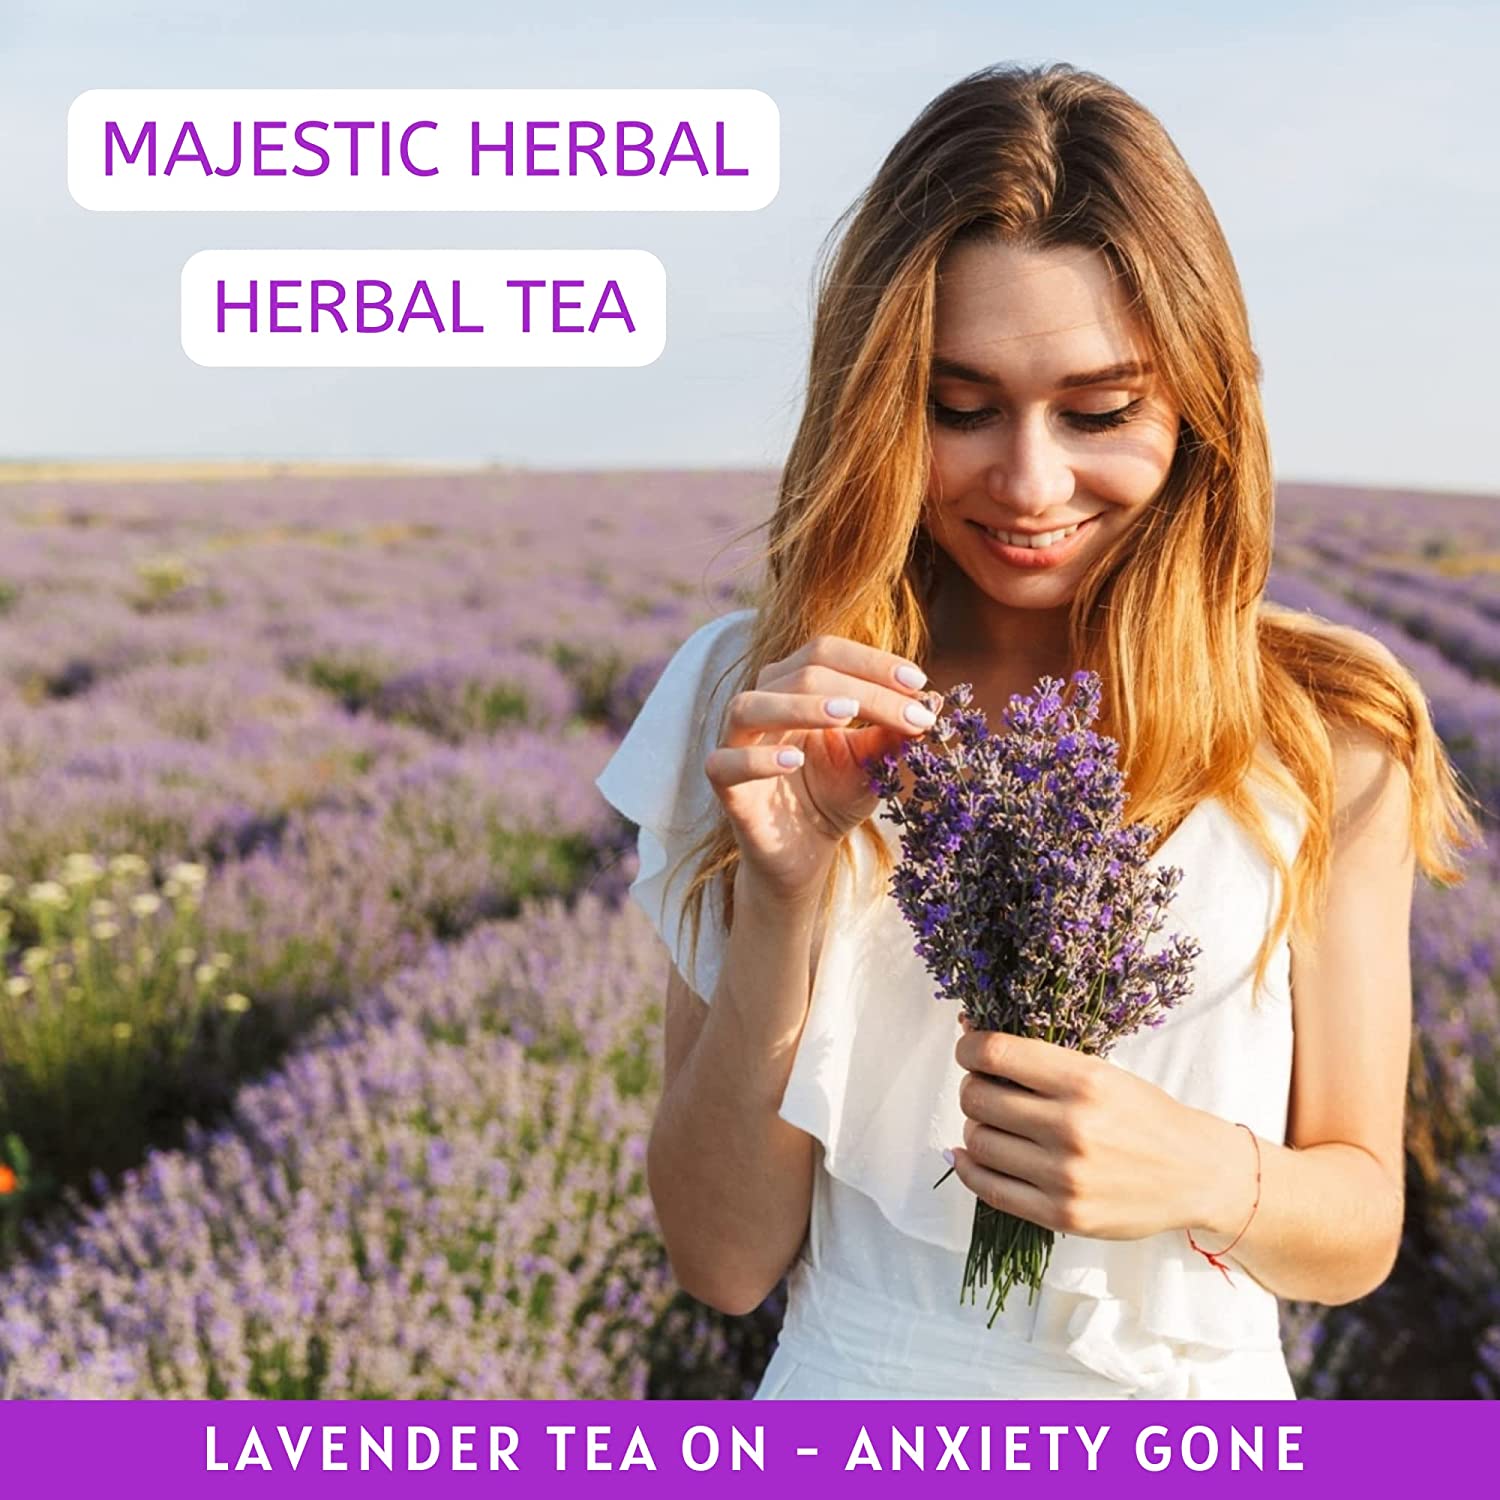 Havintha Natural Lavender Tea | Herbal Tea, Iced Tea - Caffeine Free | Organic Lavender Flower Tea - 50g (50 Cups)